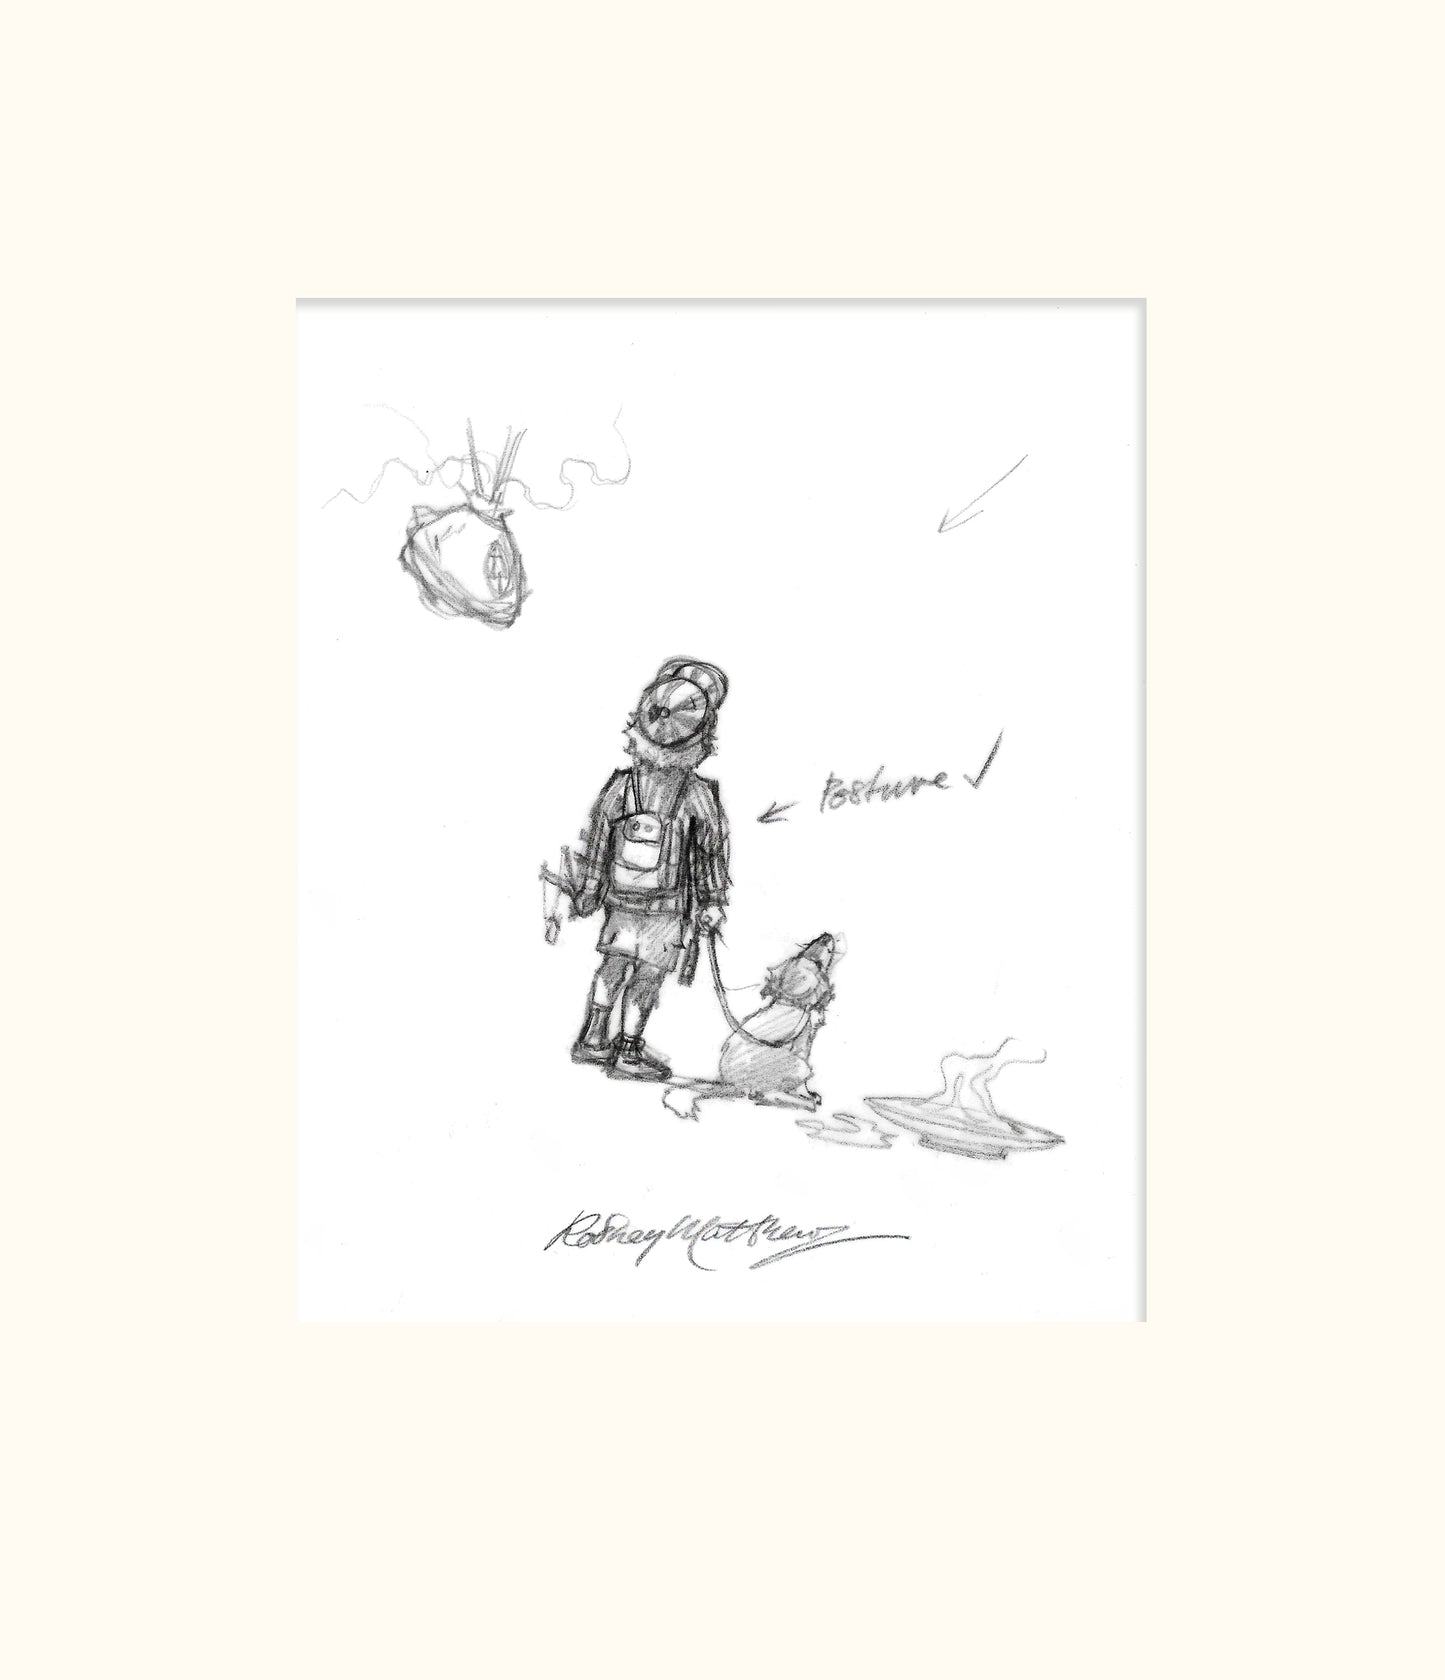 Detail from SB'D'L (Magnum) - Small boy, dog and Storyteller's bag original pencil sketch by Rodney Matthews